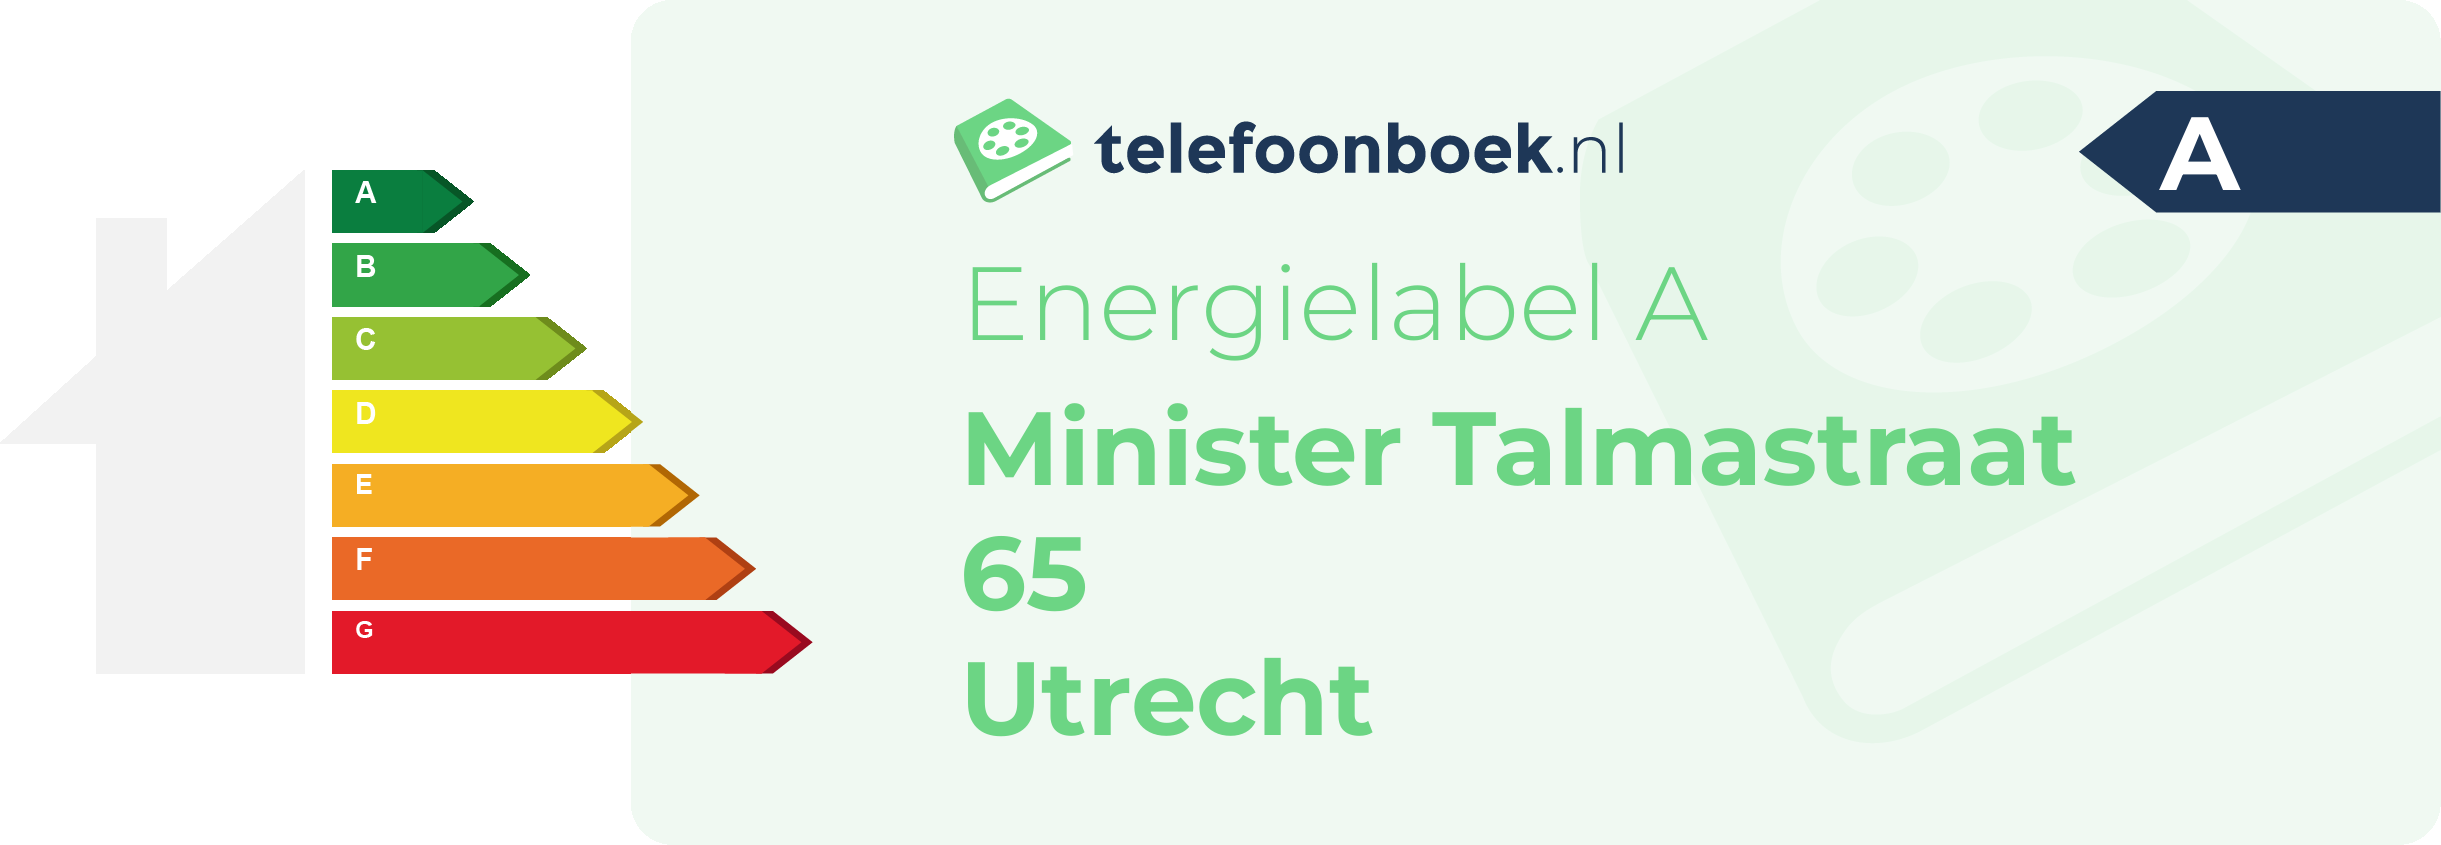 Energielabel Minister Talmastraat 65 Utrecht